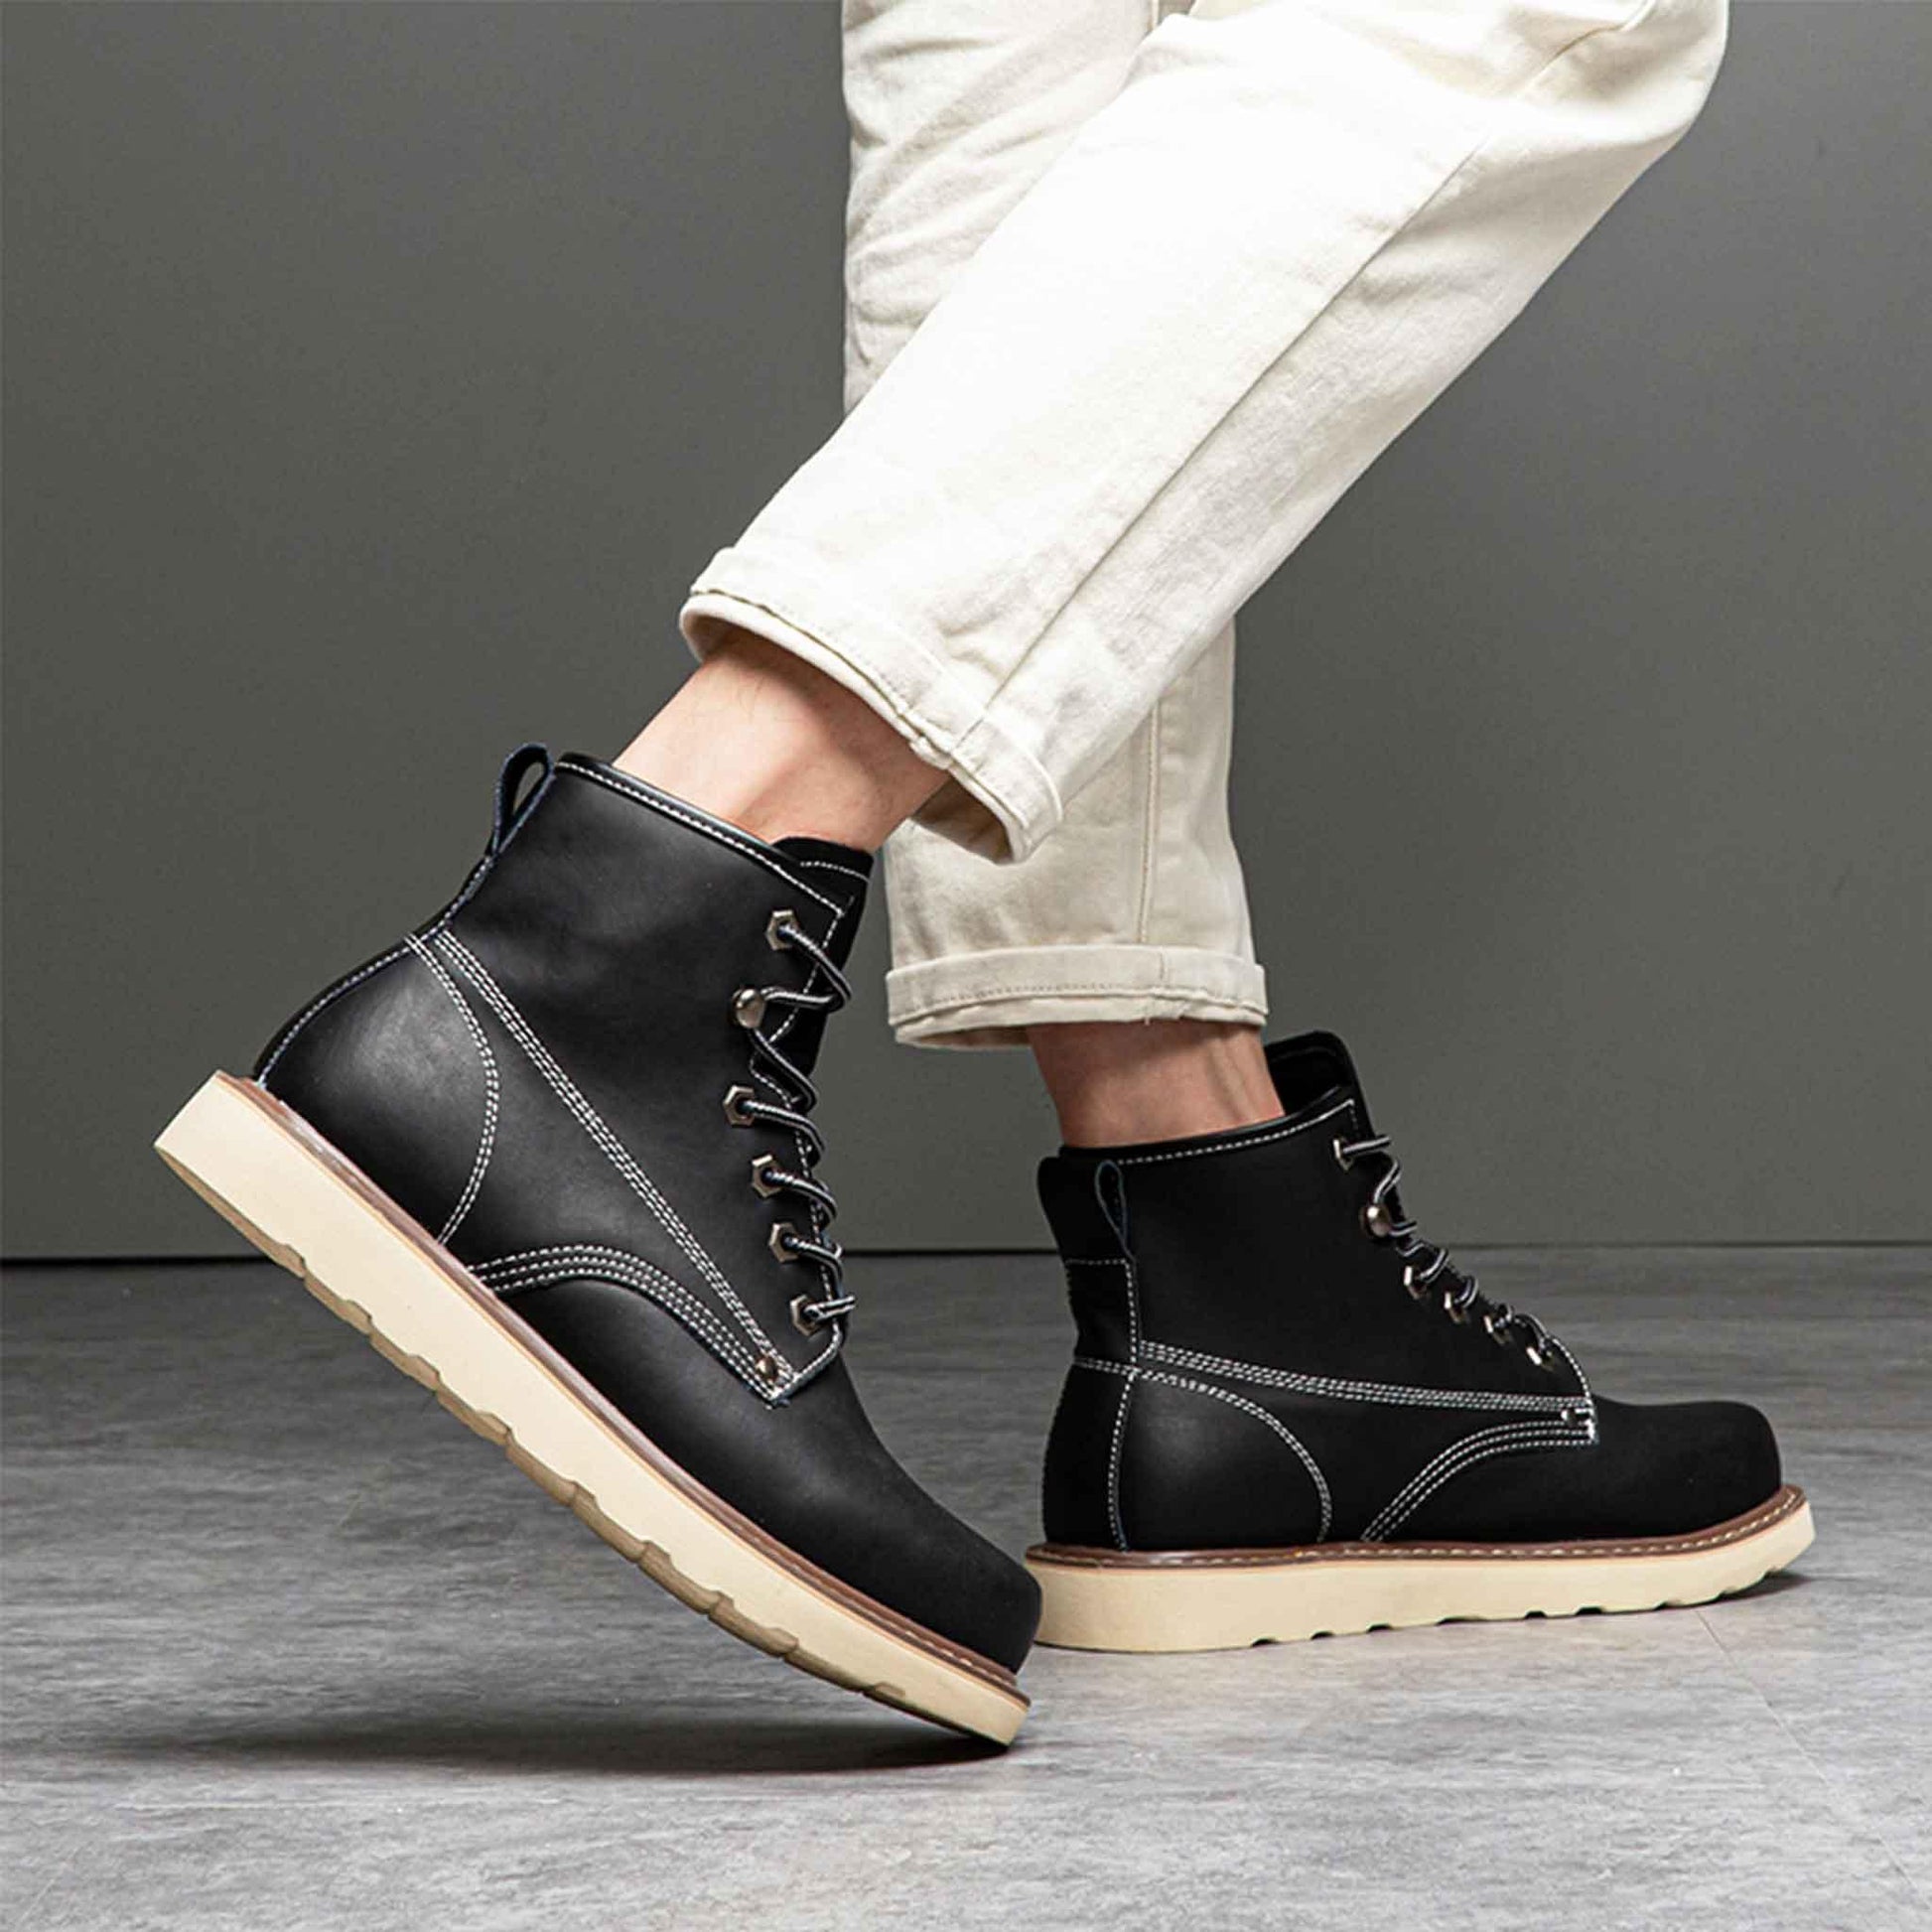 Men's 6" Soft Toe Work Boots - Wedge Sole | C002 - USINE PRO Footwear